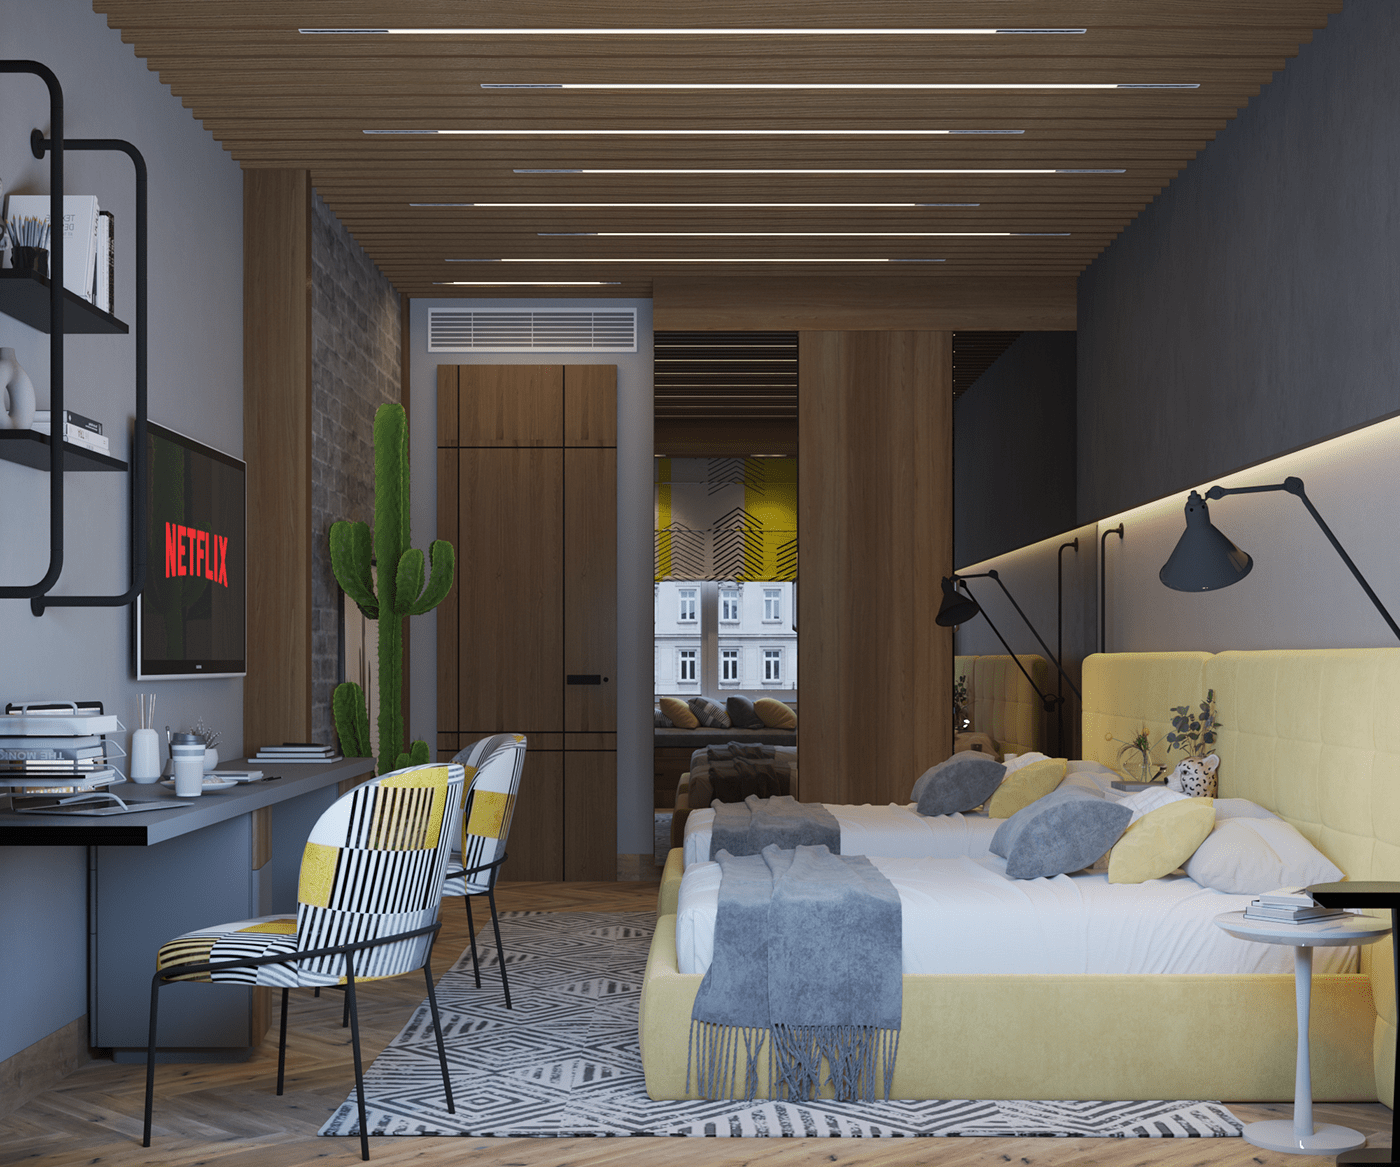 3D 3ds max architecture interior design  Render visualization vray